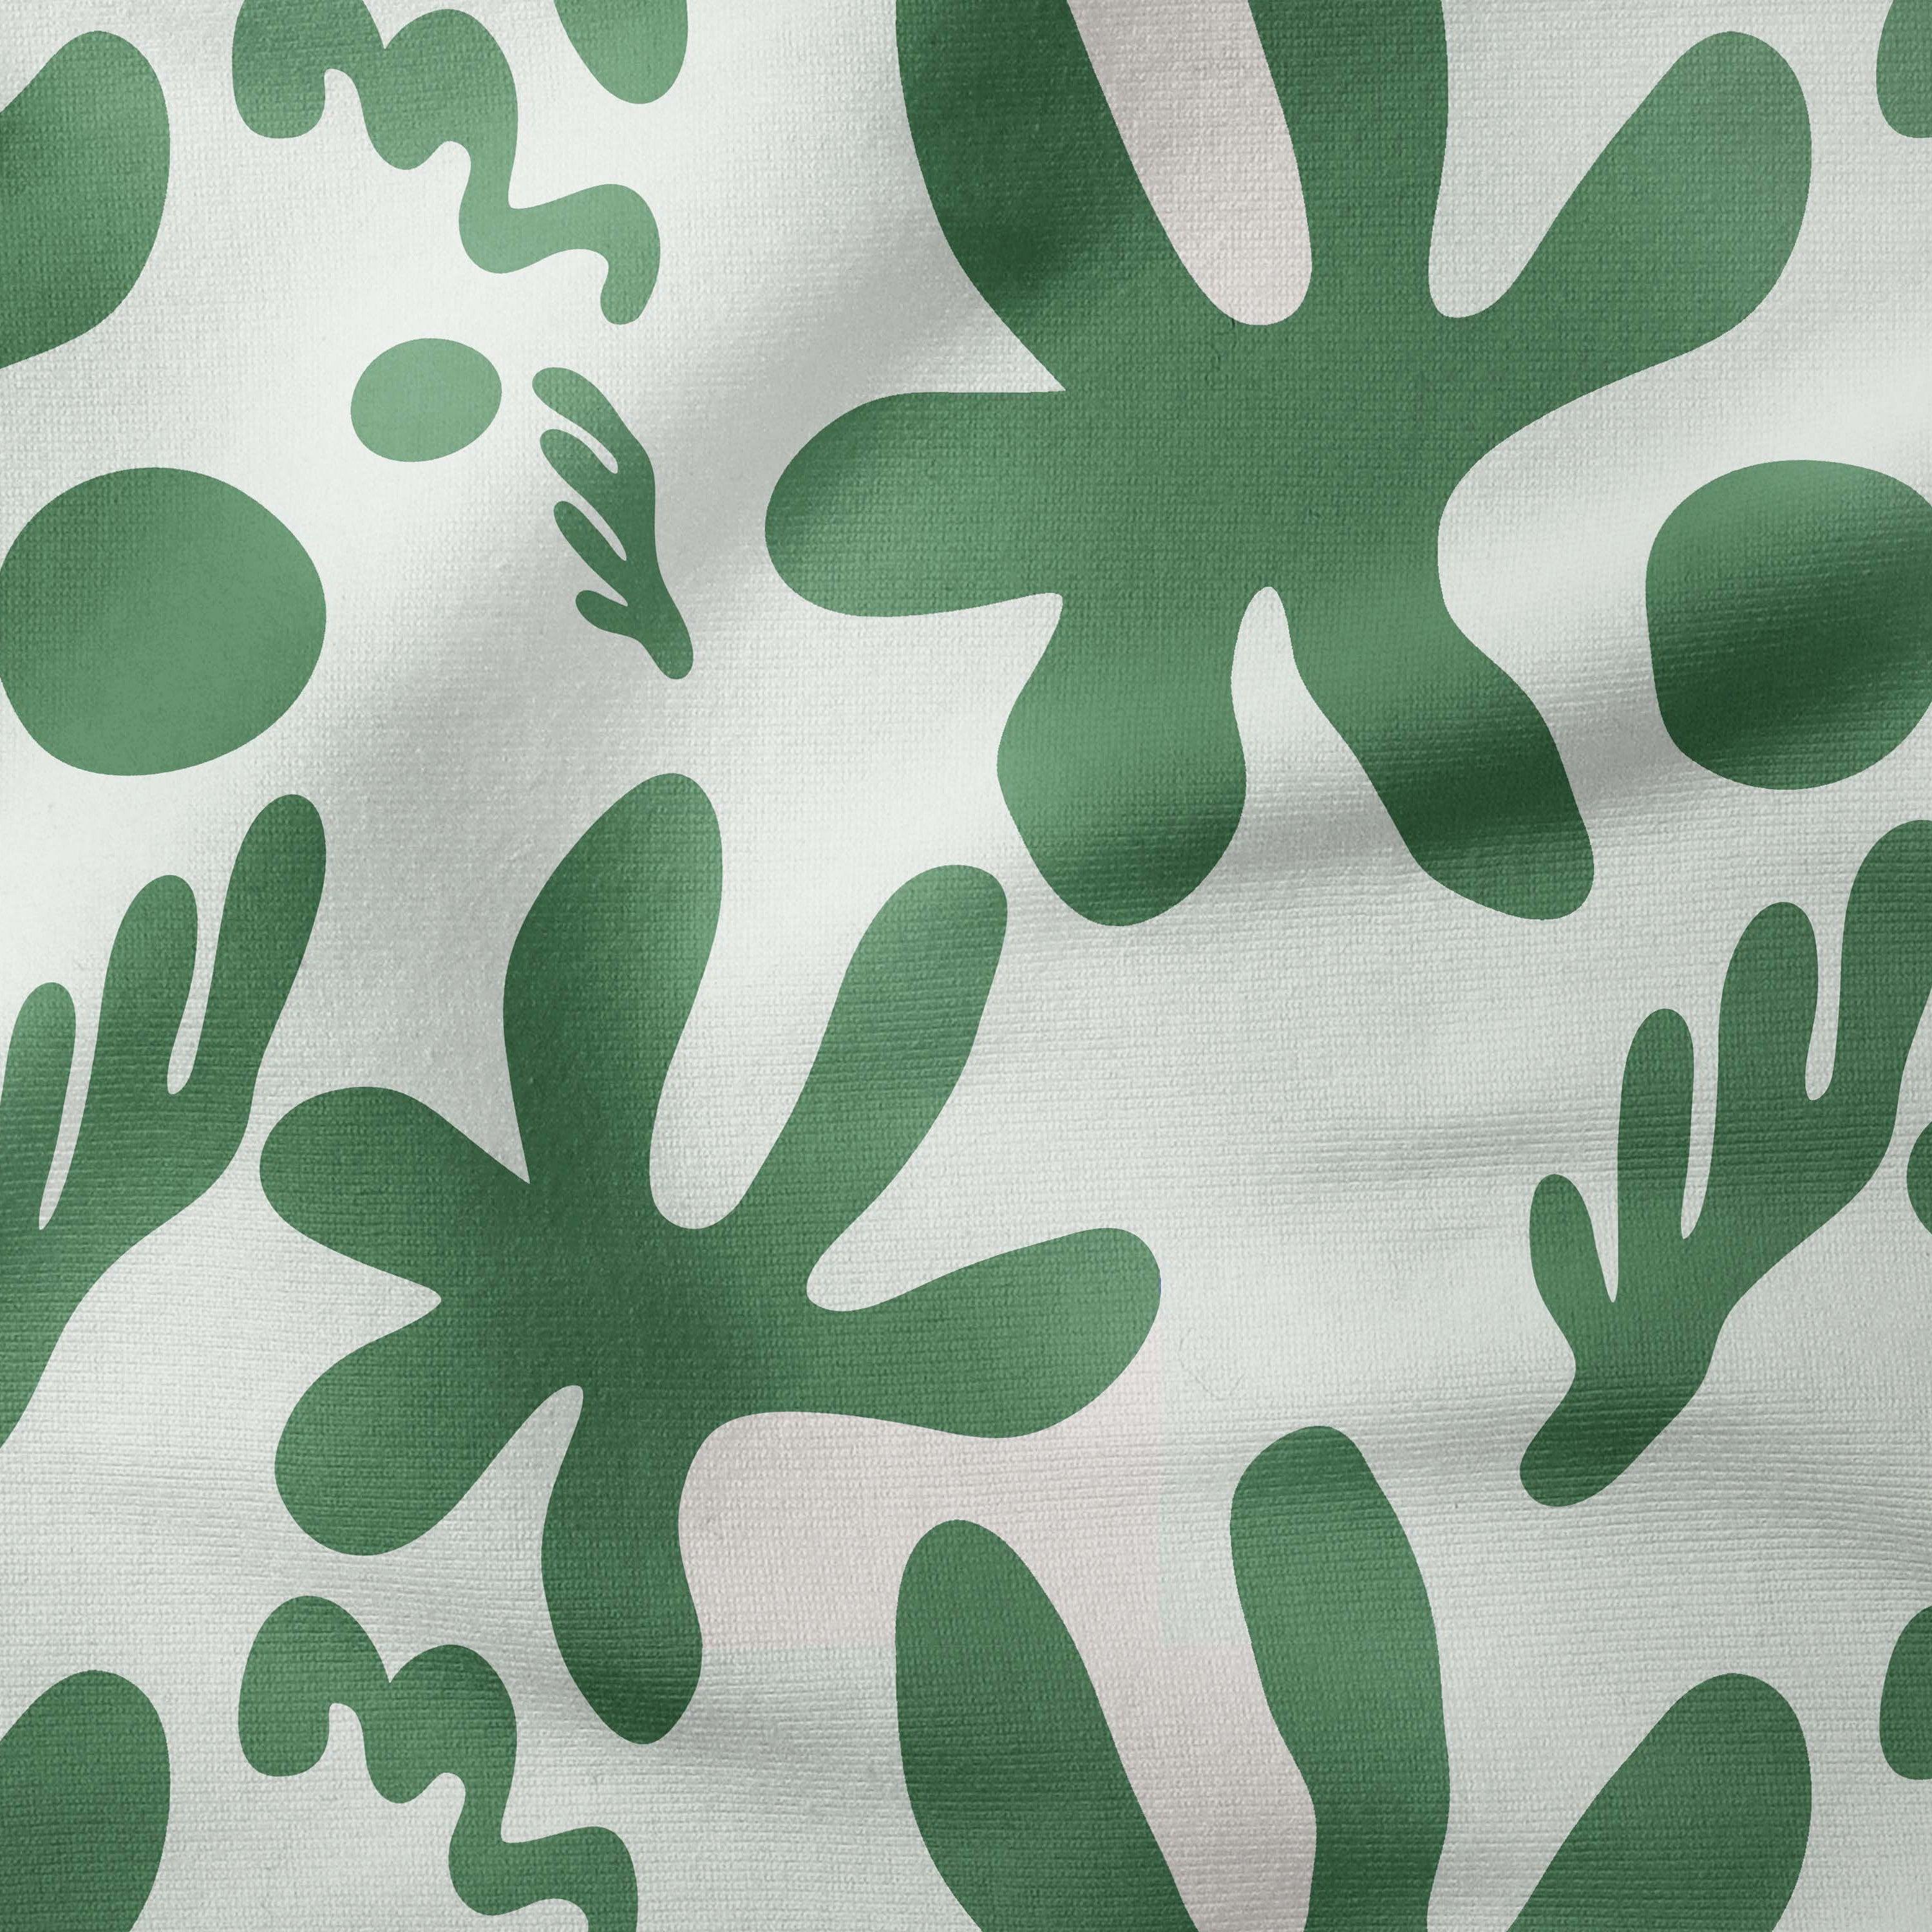 Abstract Flowers-Art Print Fabric-Melco Fabrics-Dark Green on Mint-Cotton Poplin (110gsm)-Online-Fabric-Store-Australia